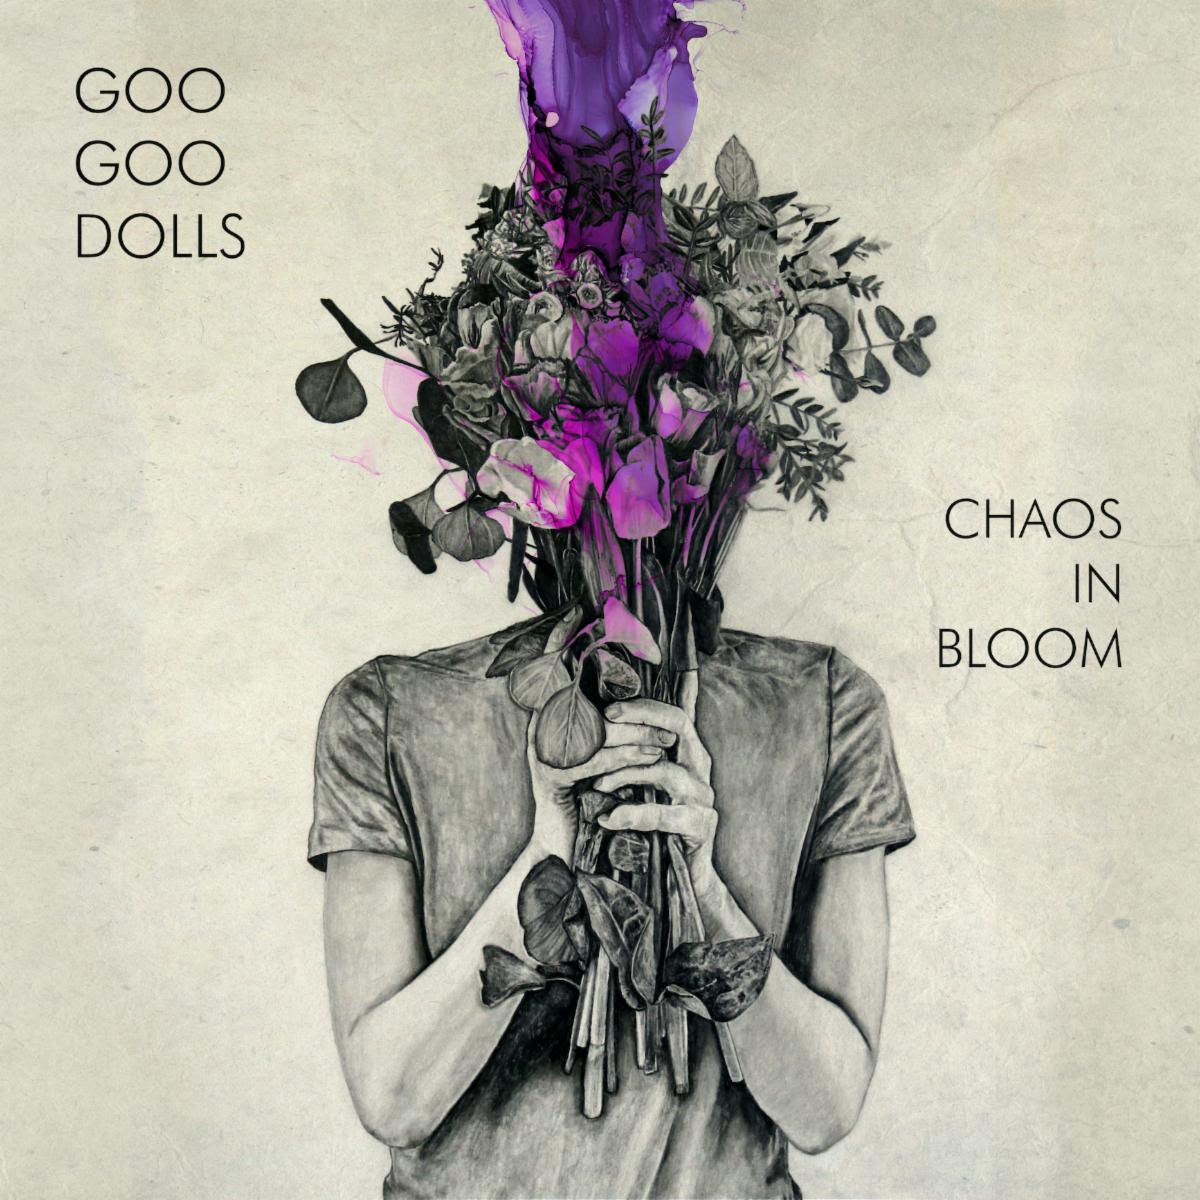 Goo Goo Dolls - `Chaos in Bloom` (Artwork courtesy of Warner Records/BB Gun Press)